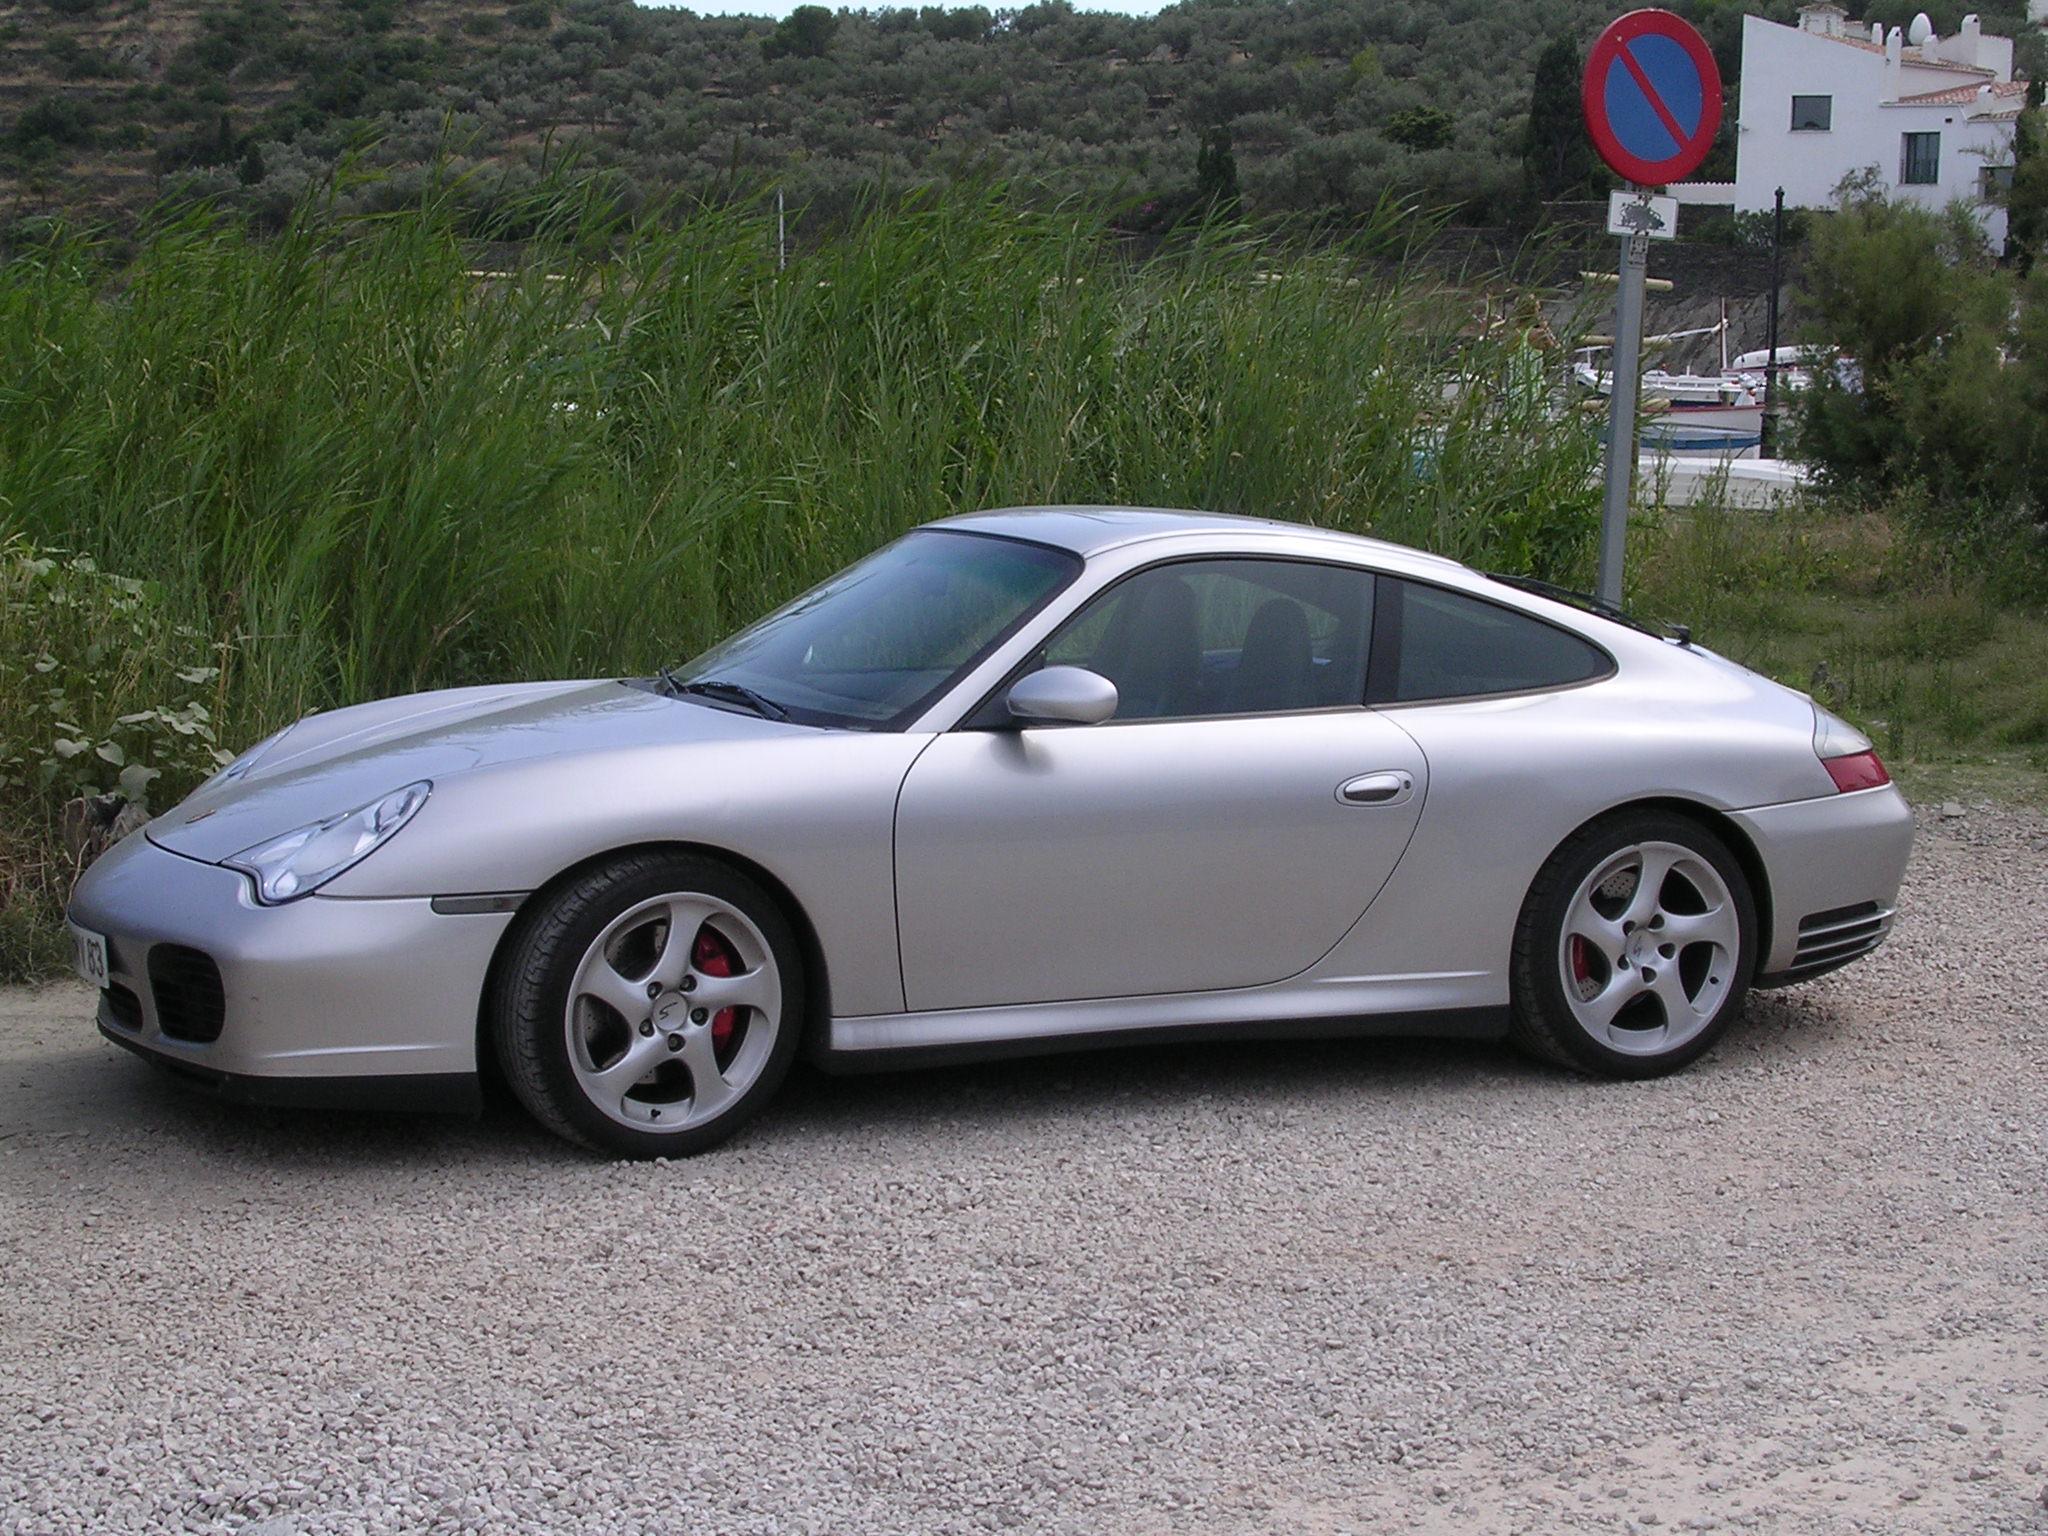 Porsche 911 Carrera 4 996 0-60, quarter mile, acceleration times -  